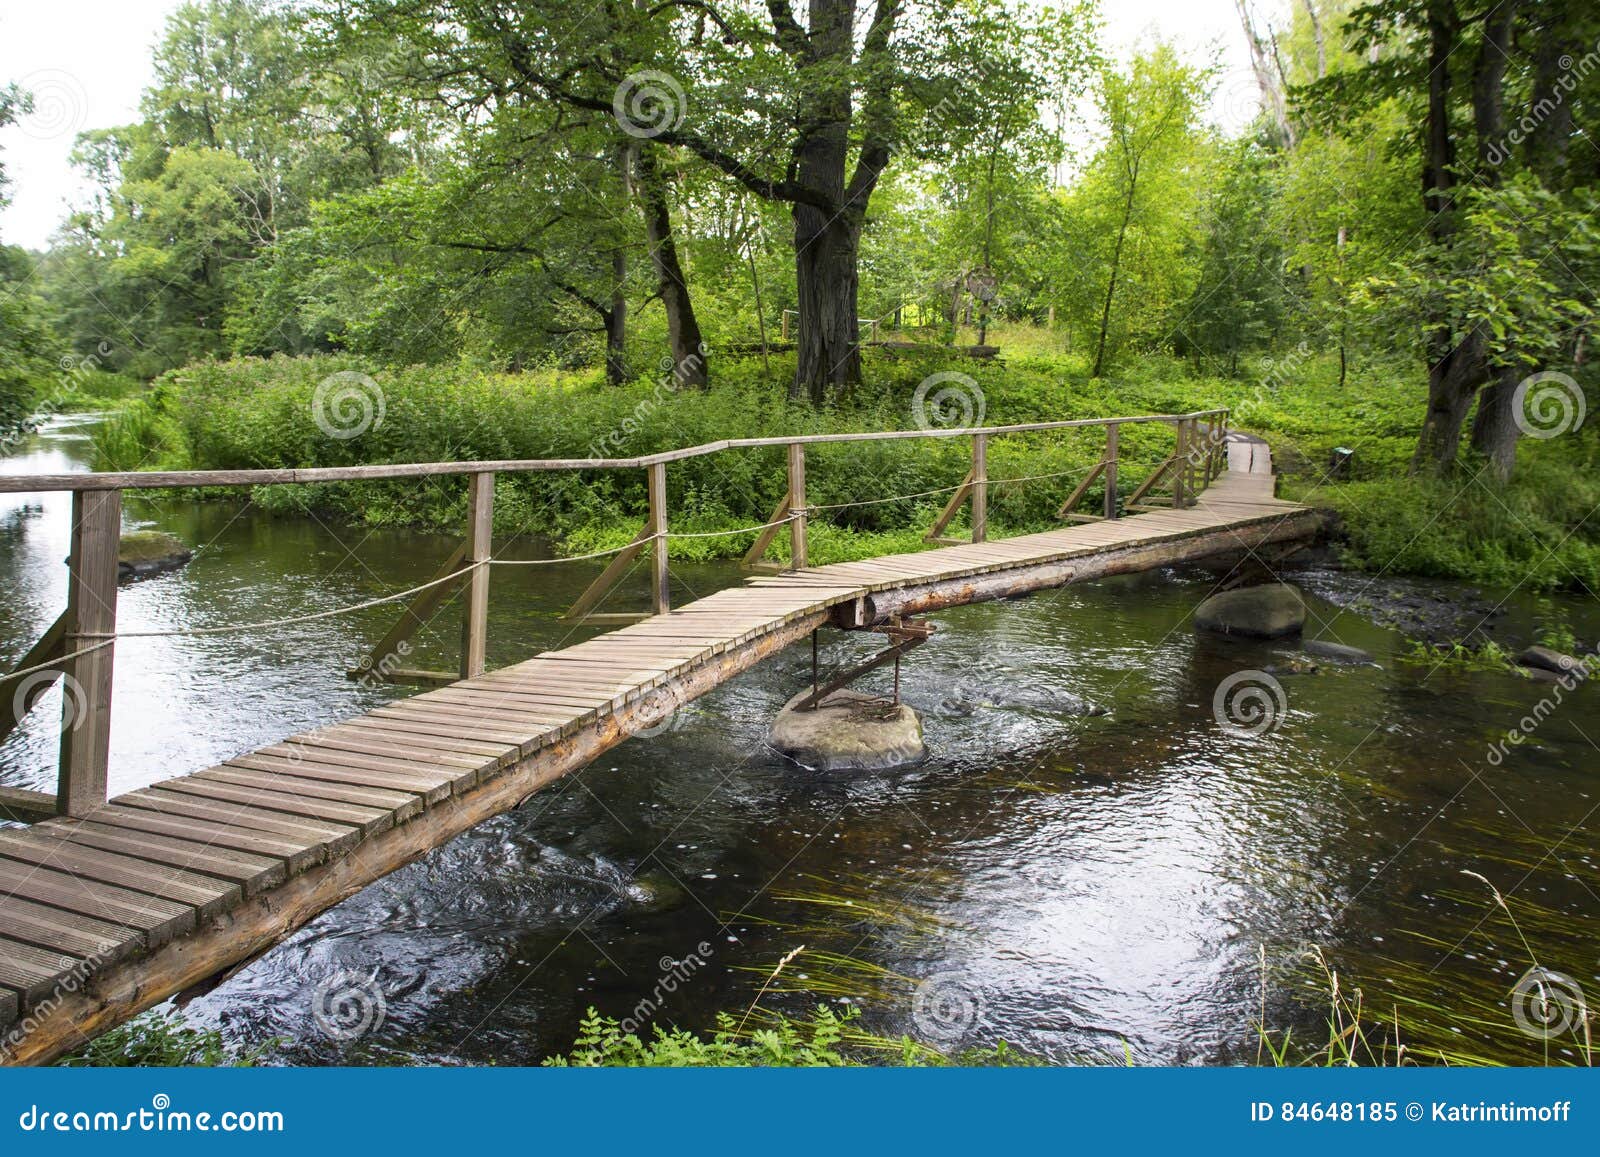 summer forest landscape witht he wooden bridge